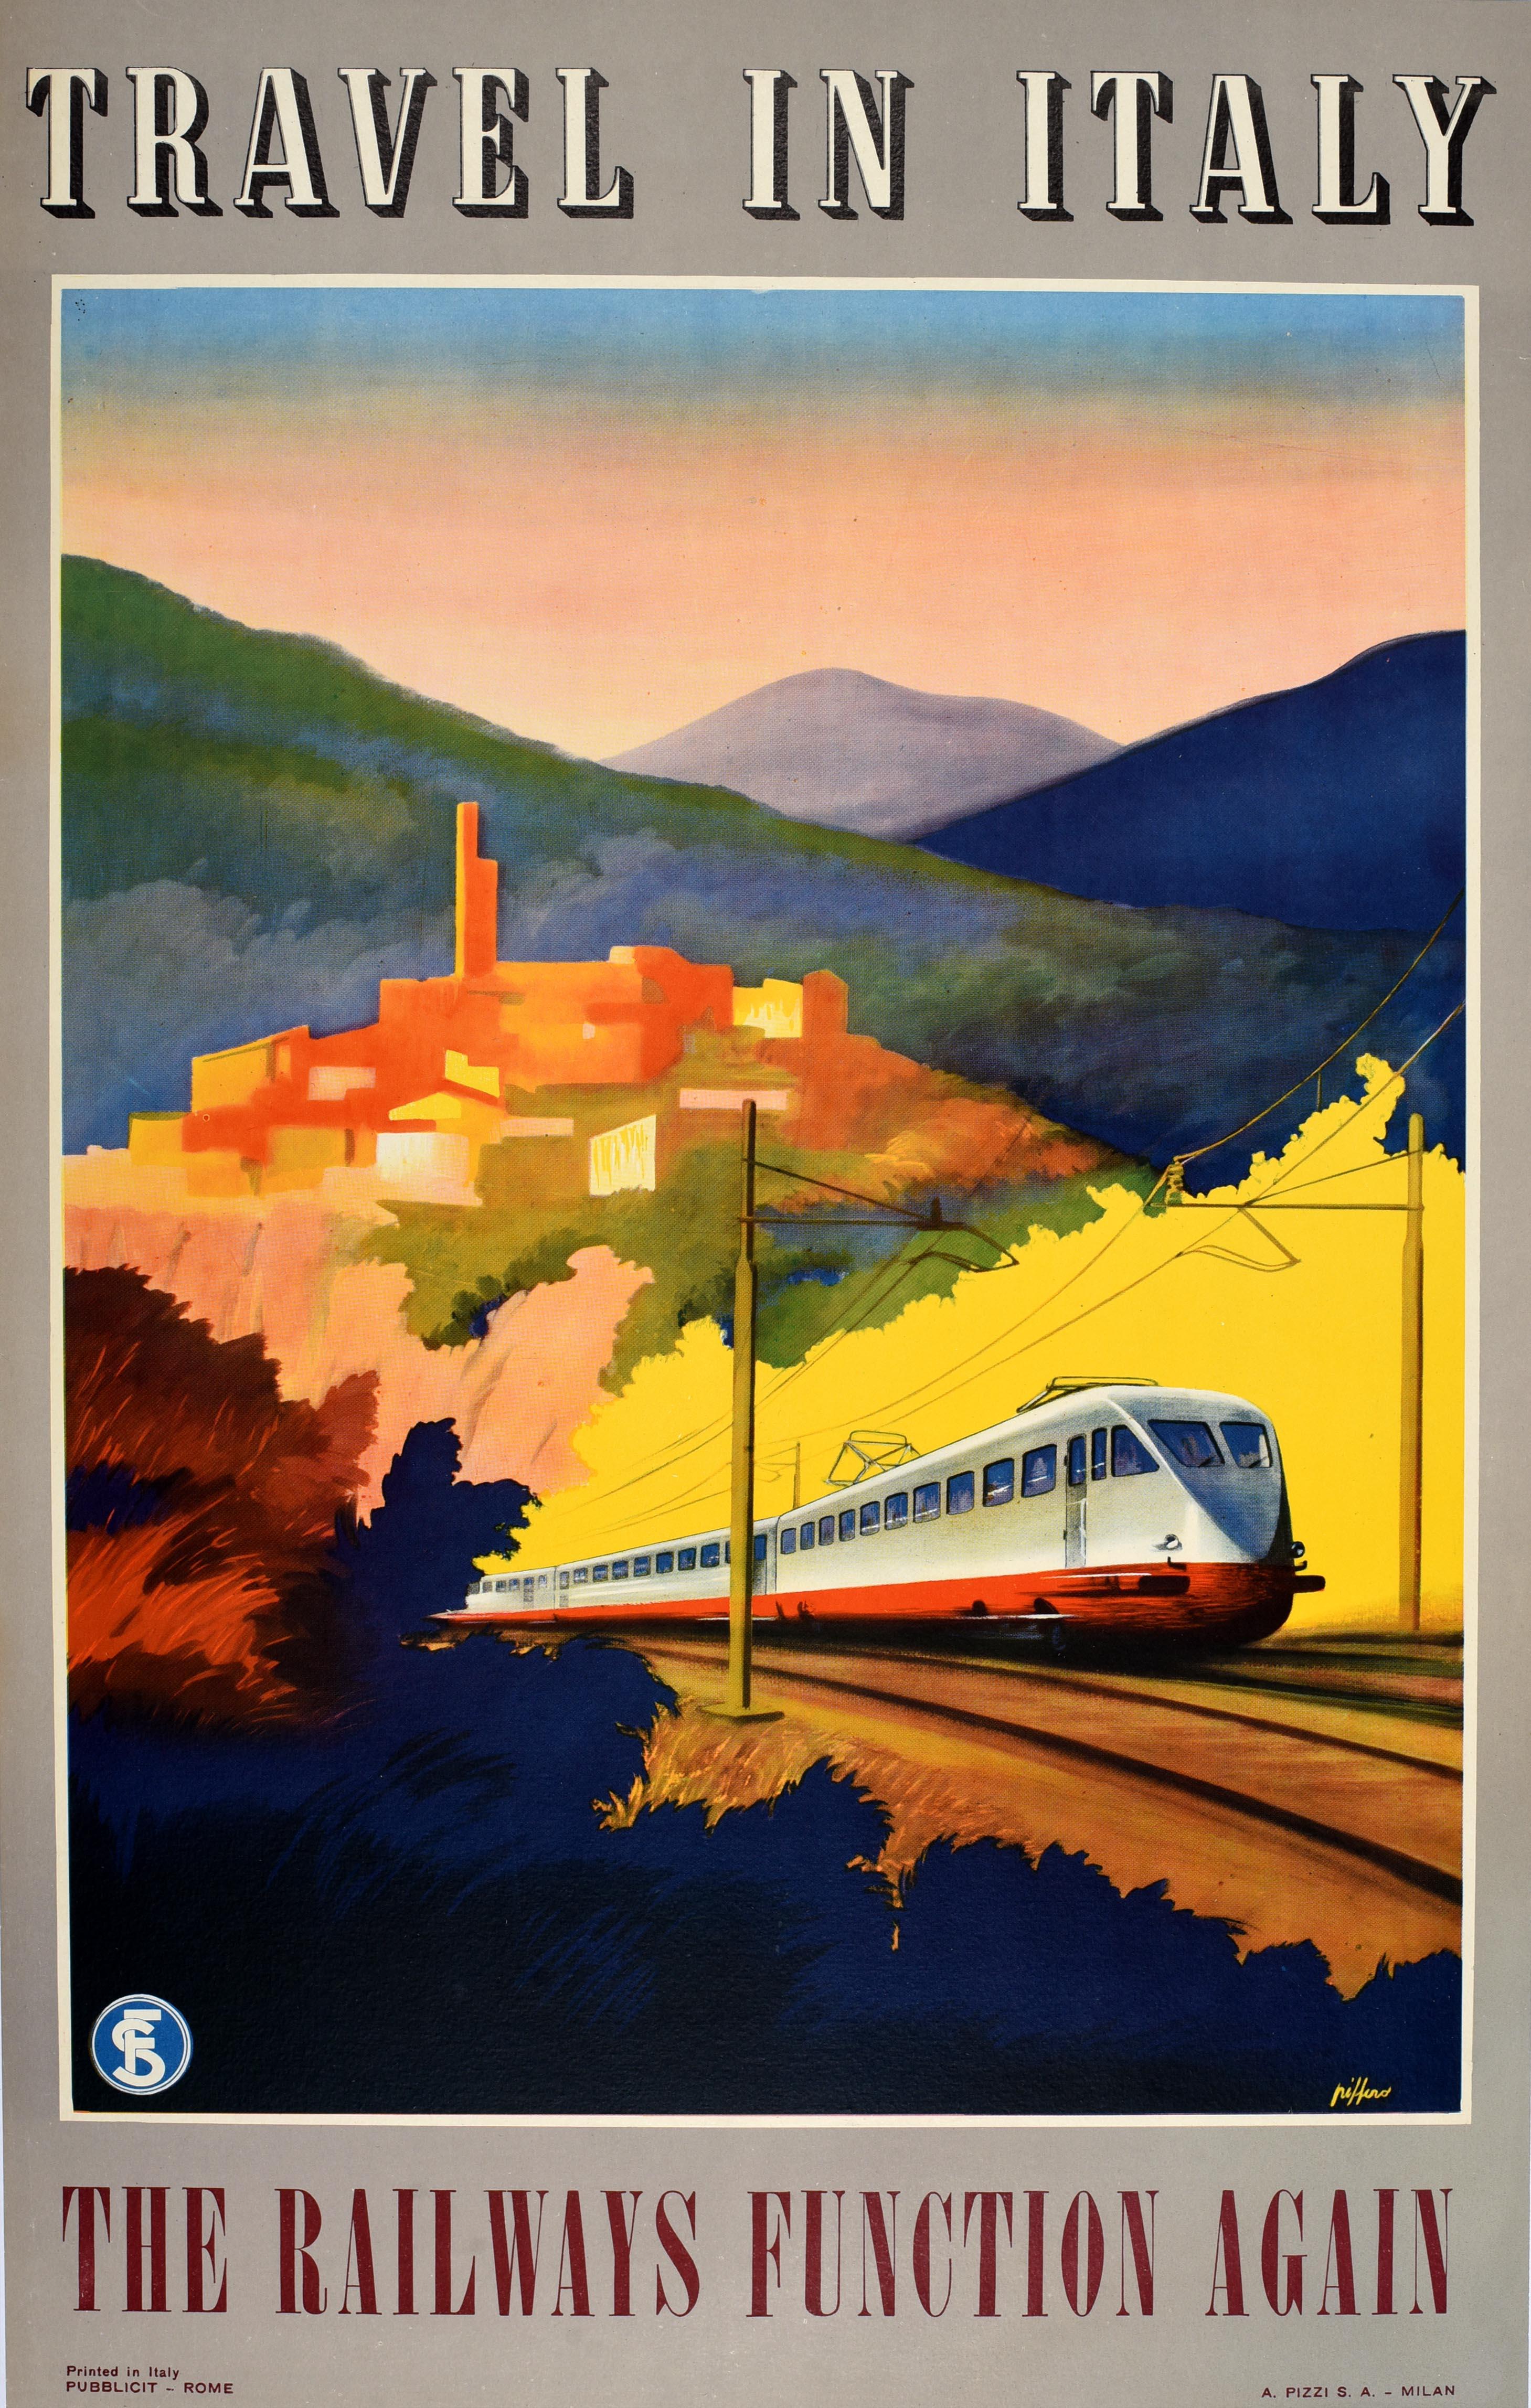 Piffero Print - Original Vintage Train Poster Travel Italy Italian State Railways Function Again